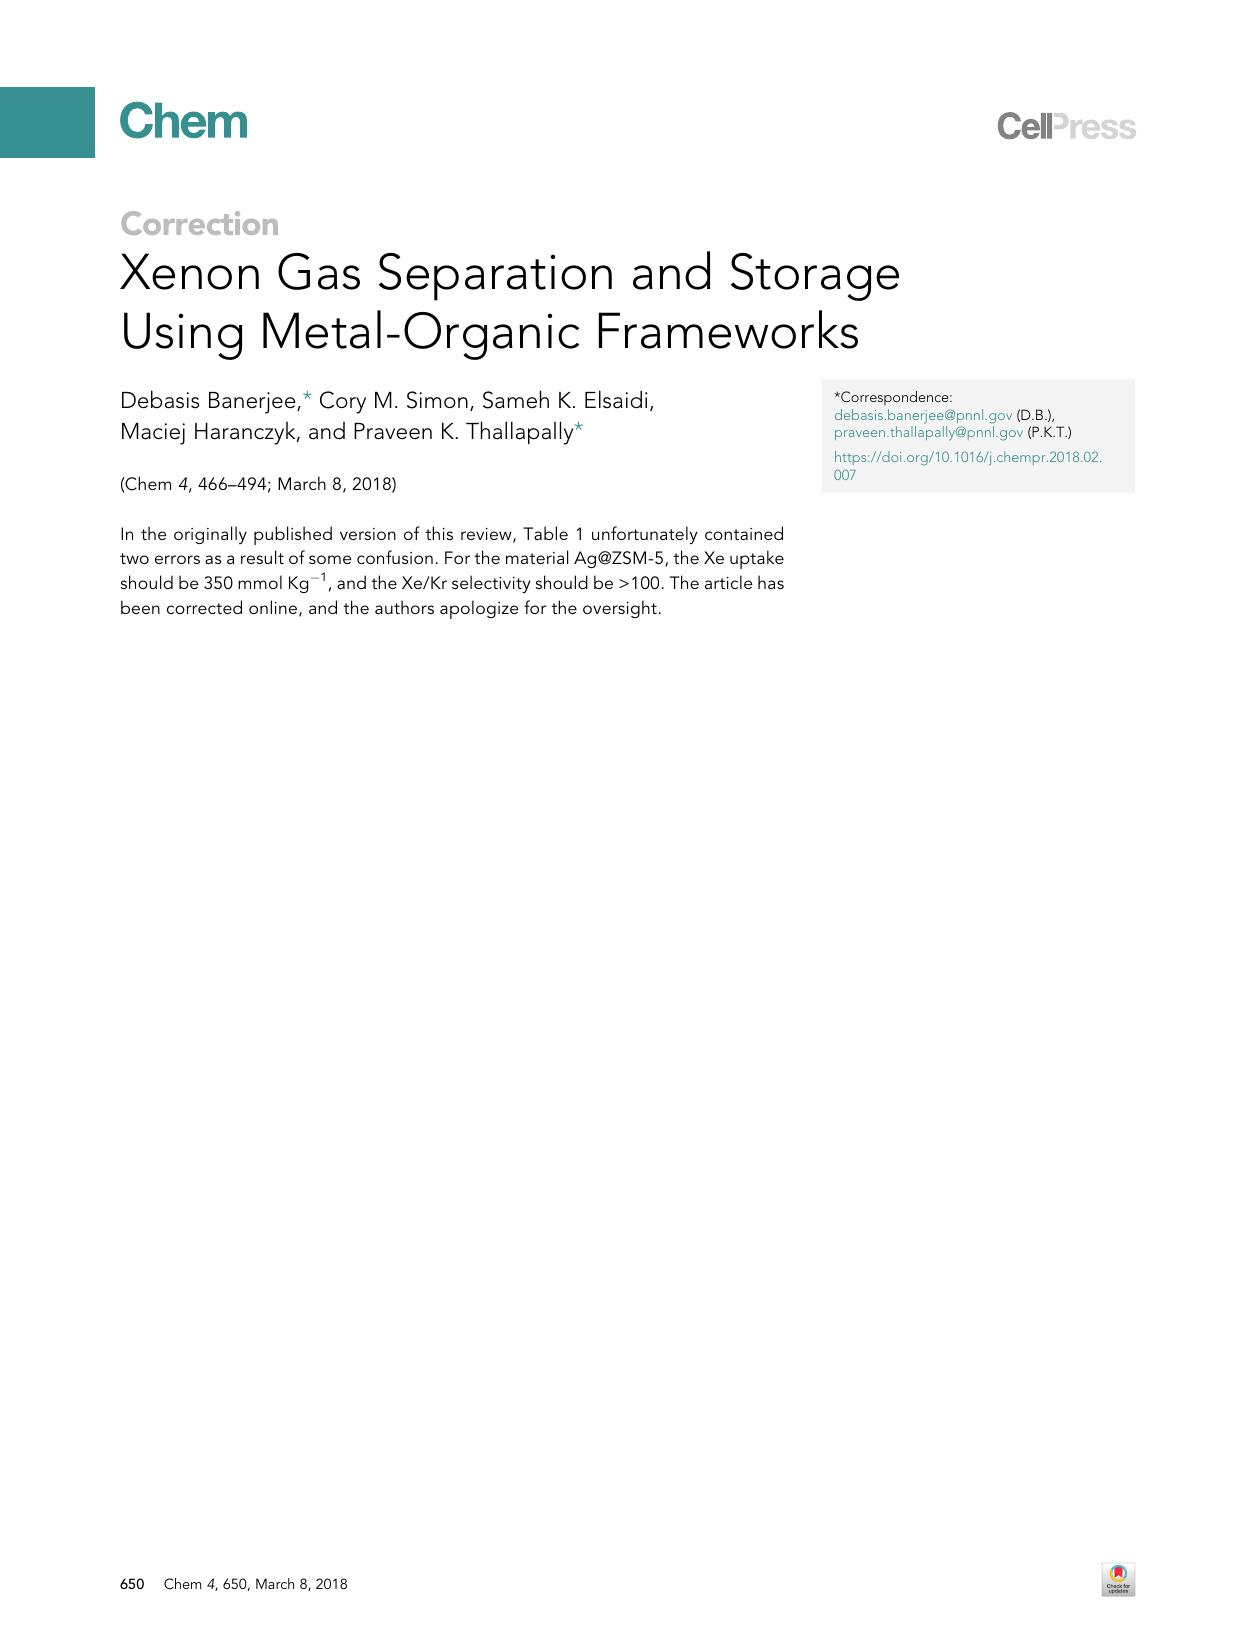 Xenon Gas Separation and Storage Using Metal-Organic Frameworks by Debasis Banerjee & Cory M. Simon & Sameh K. Elsaidi & Maciej Haranczyk & Praveen K. Thallapally